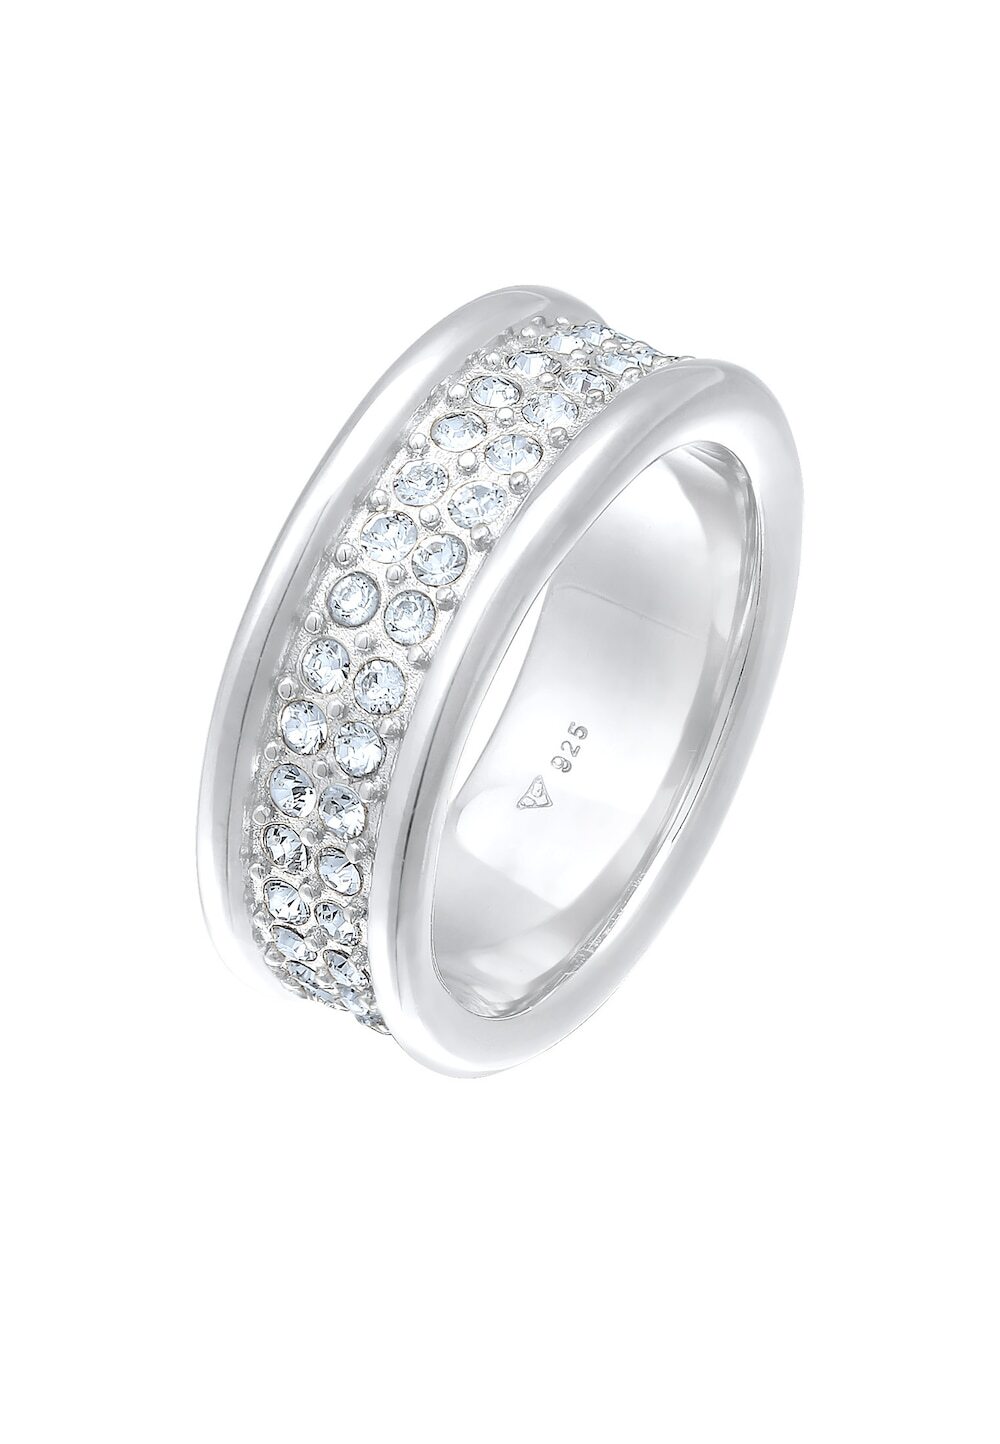 Elli PREMIUM Elli PREMIUM Elli PREMIUM Ring Dames Band Ring Elegant Fonkeling met Kristallen in 925 Sterling Zilver Ringen